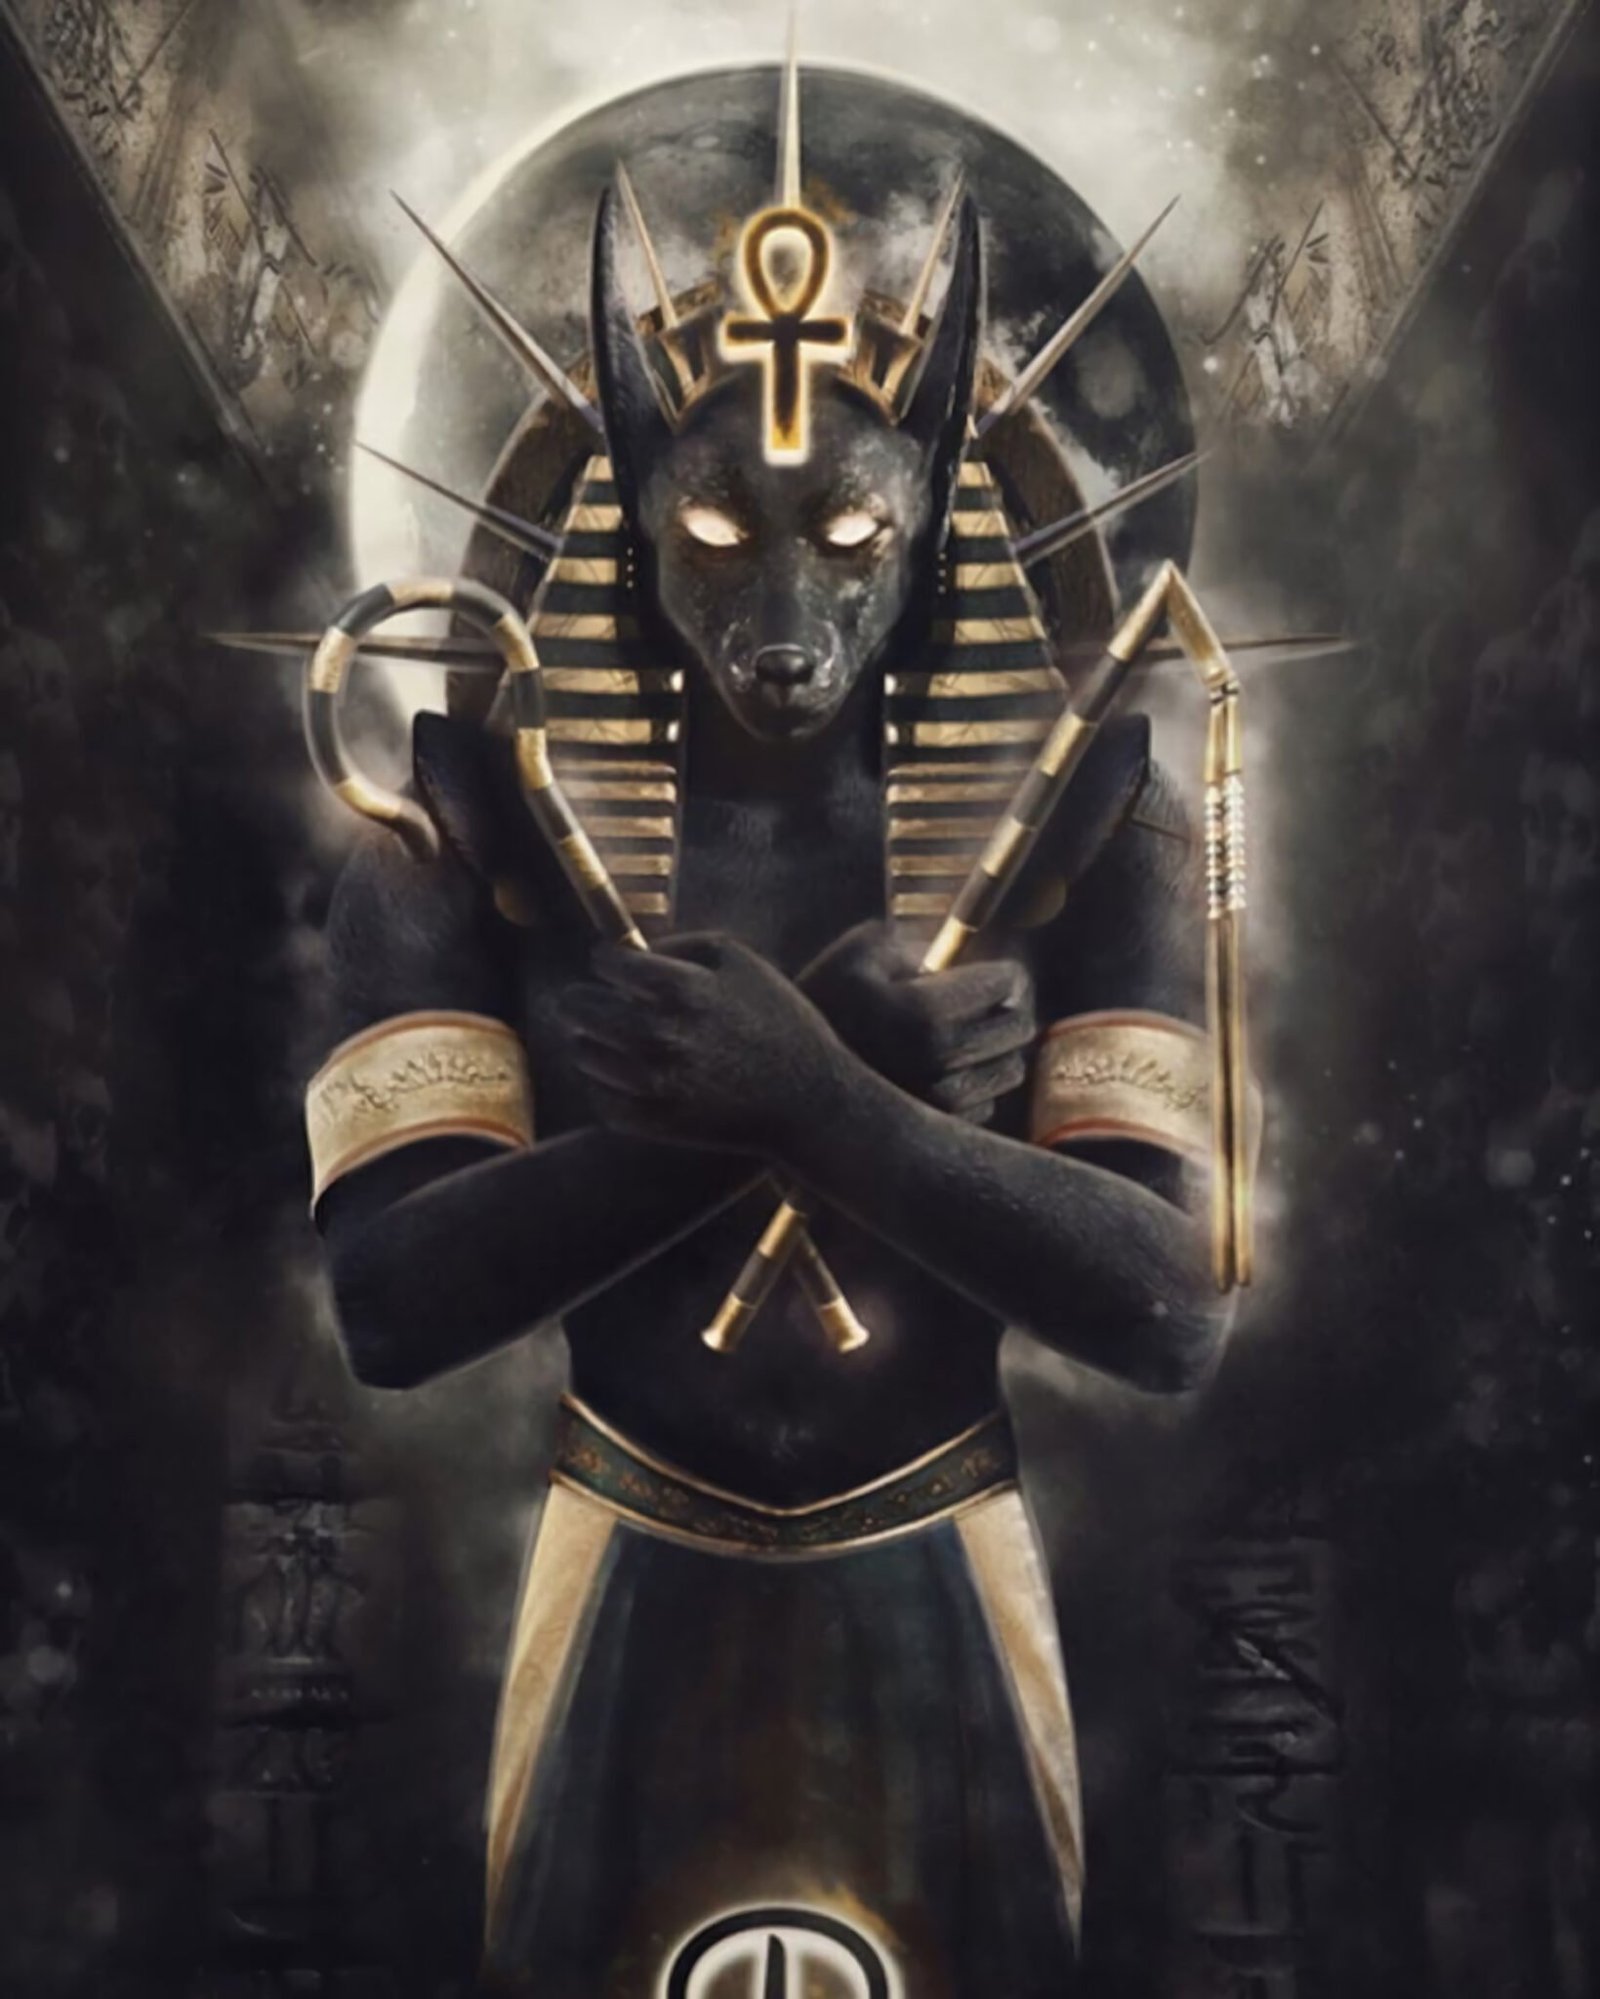 древние египетские боги картинки